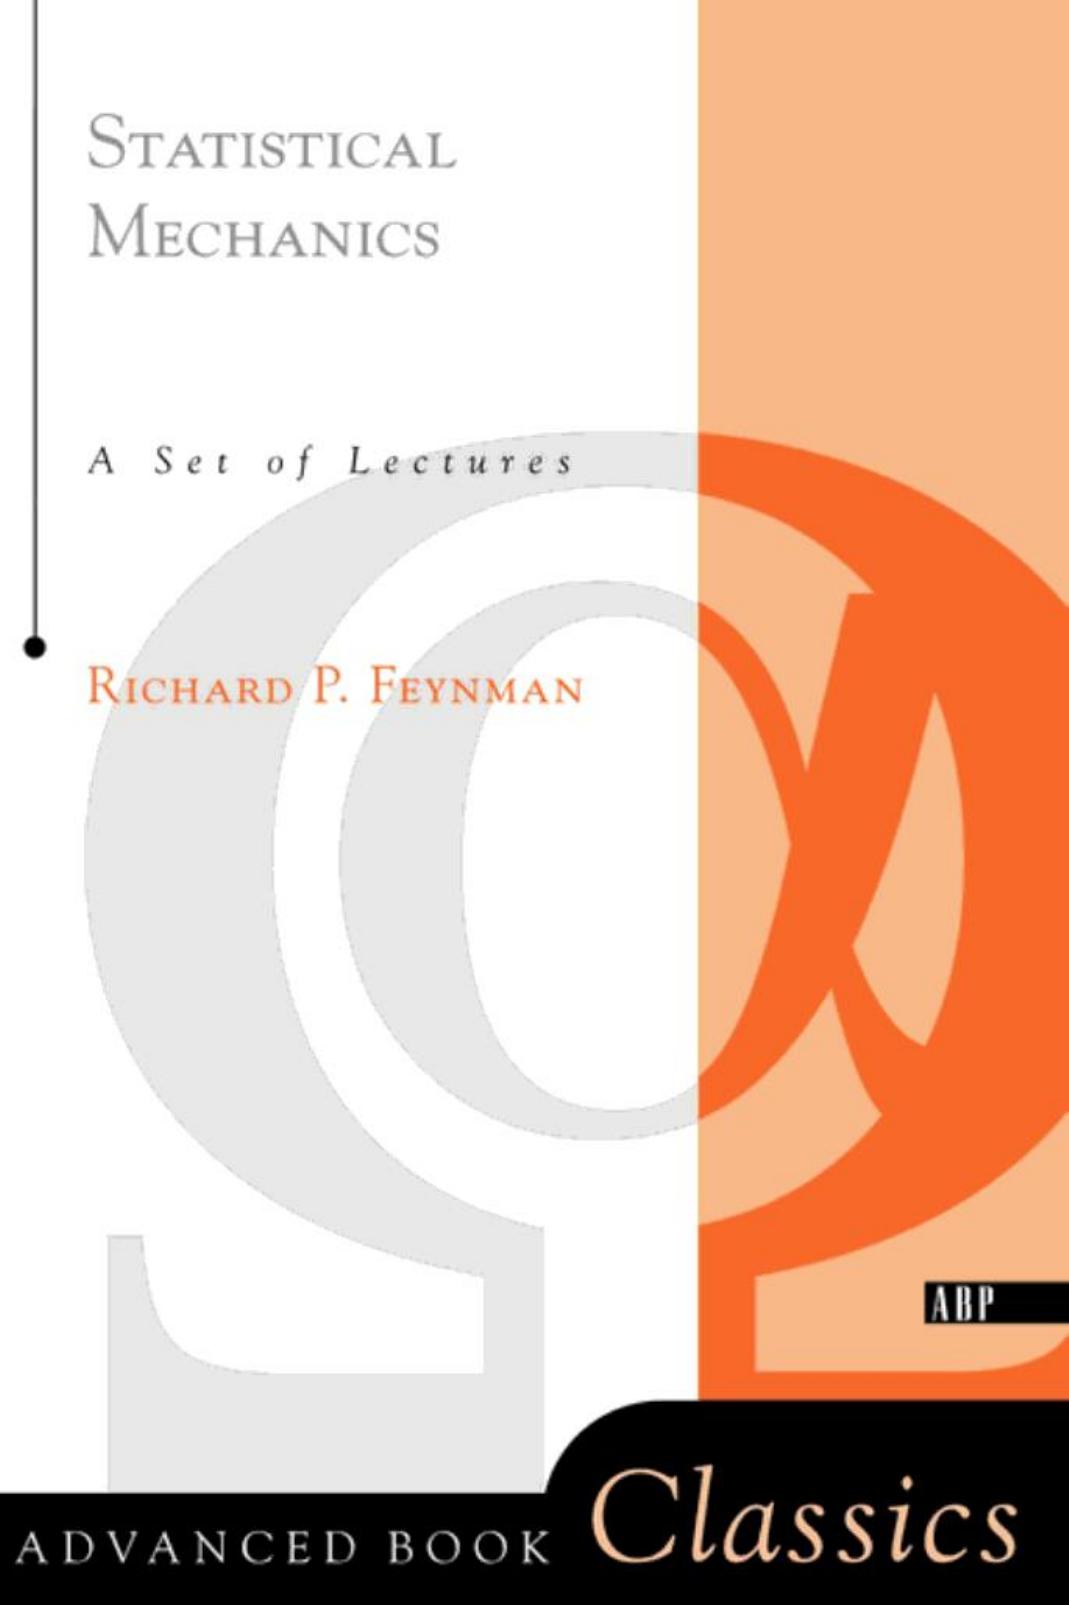 Statistical Mechanics: A Set of Lectures (Advanced Books Classics) by Richard P. Feynman